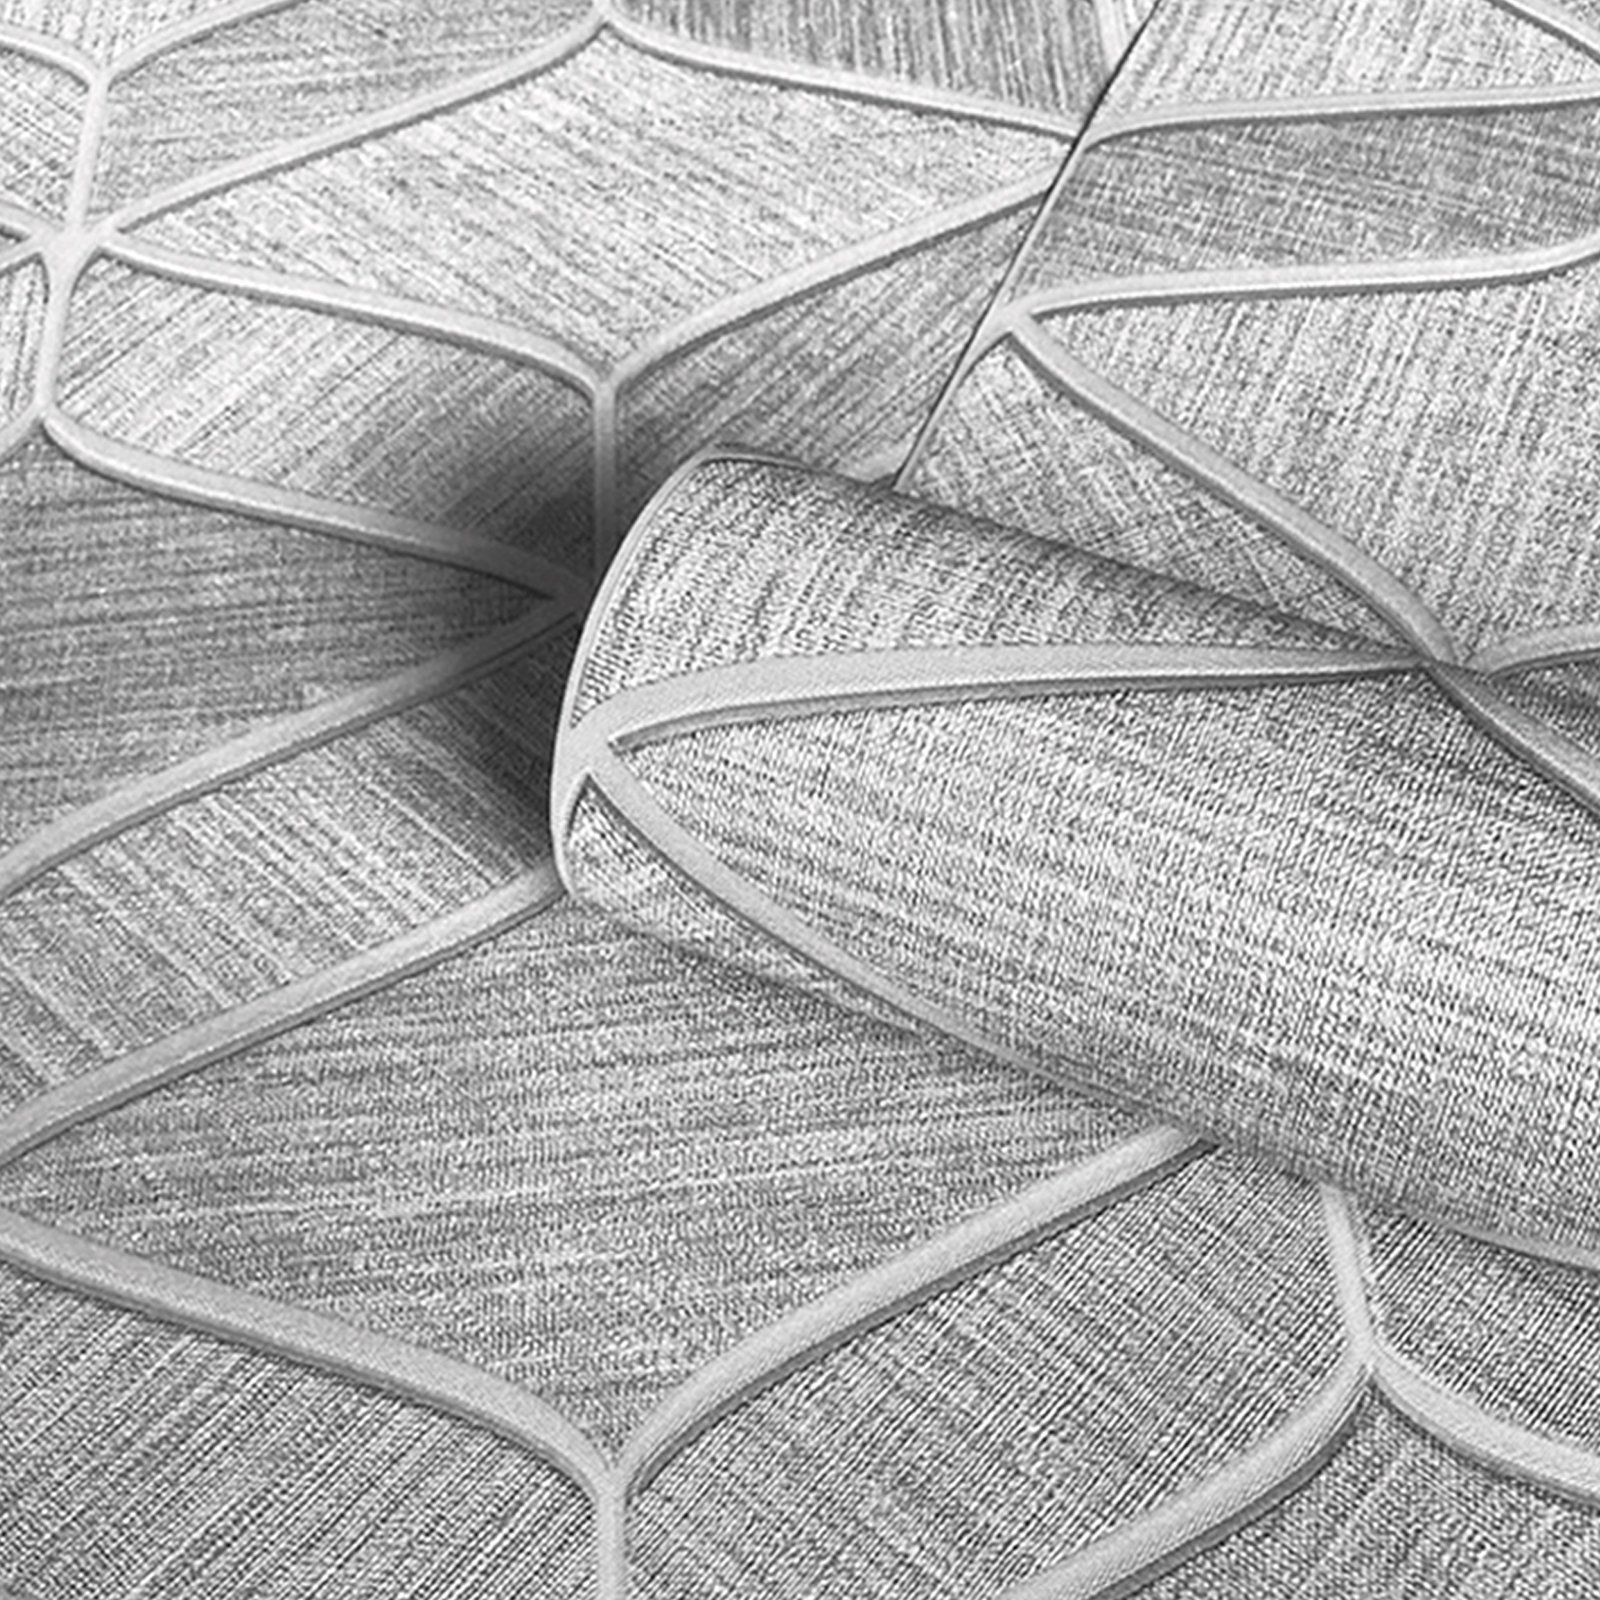 Calathea Leaf Wallpaper